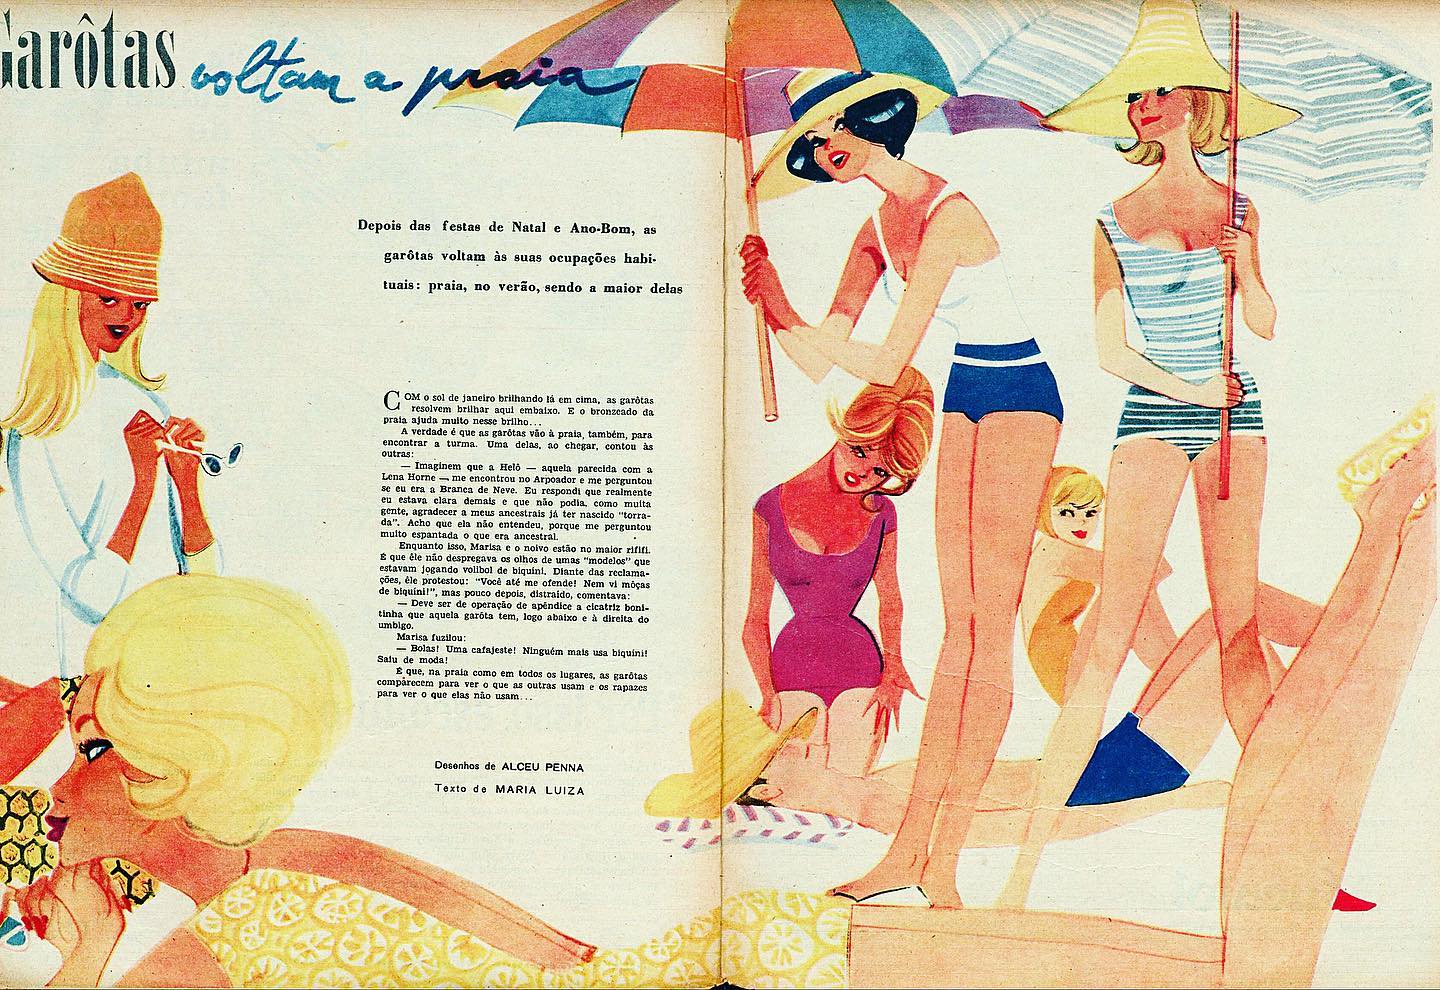 "Garotas voltam à praia", ilustração de Alceu Penna, 1960.